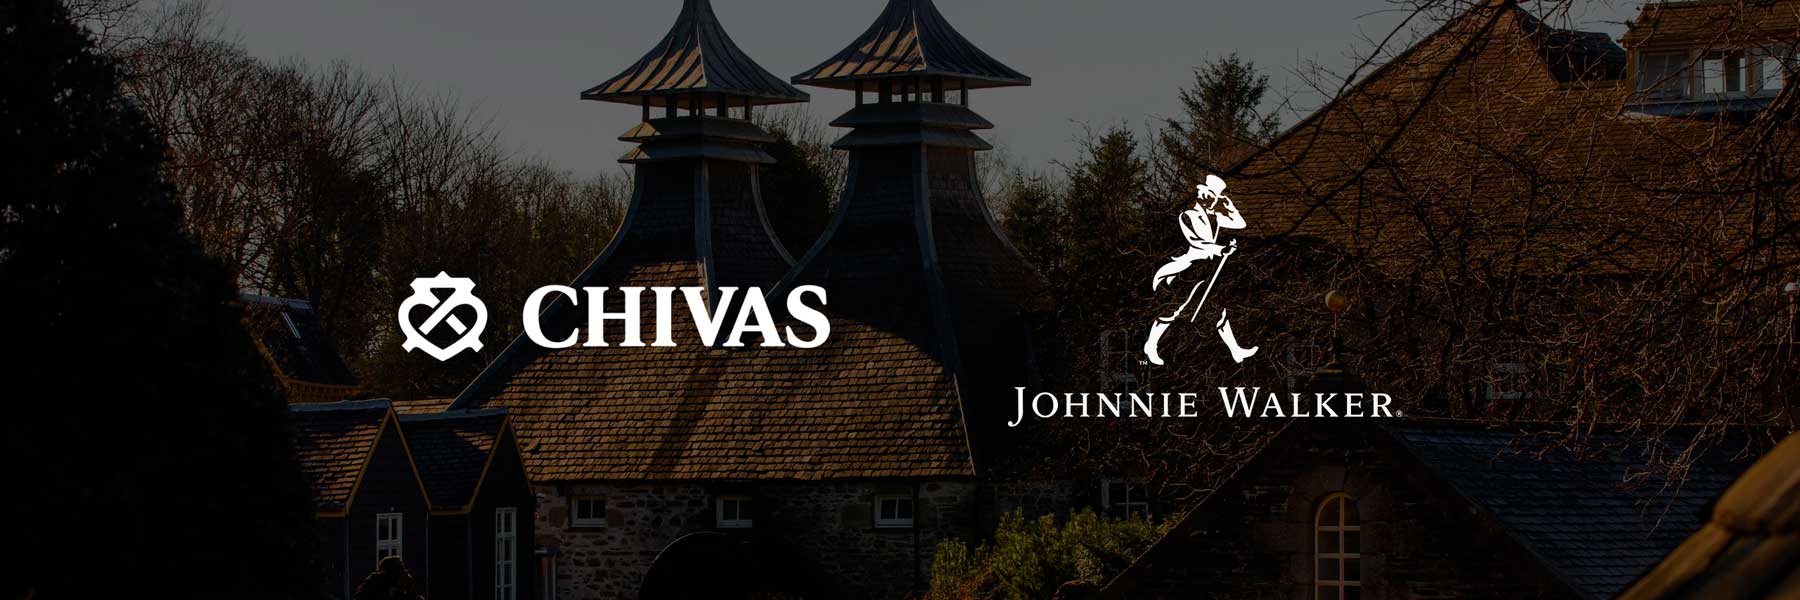 Chivas Regal vs Johnnie Walker | Selecting the best Scotch blend